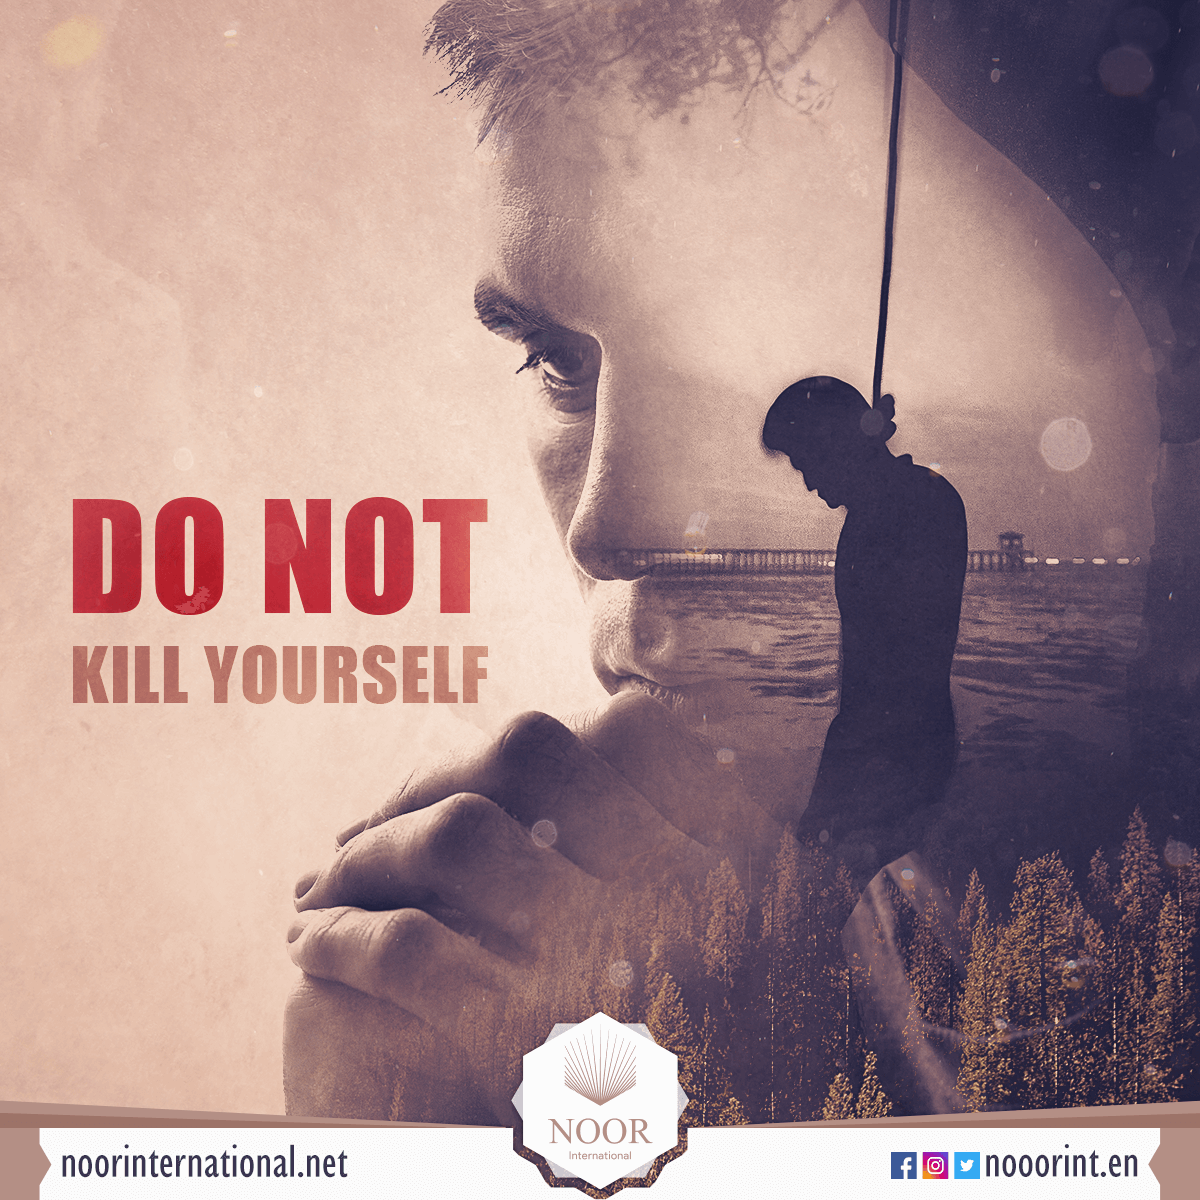 Do not kill yourself